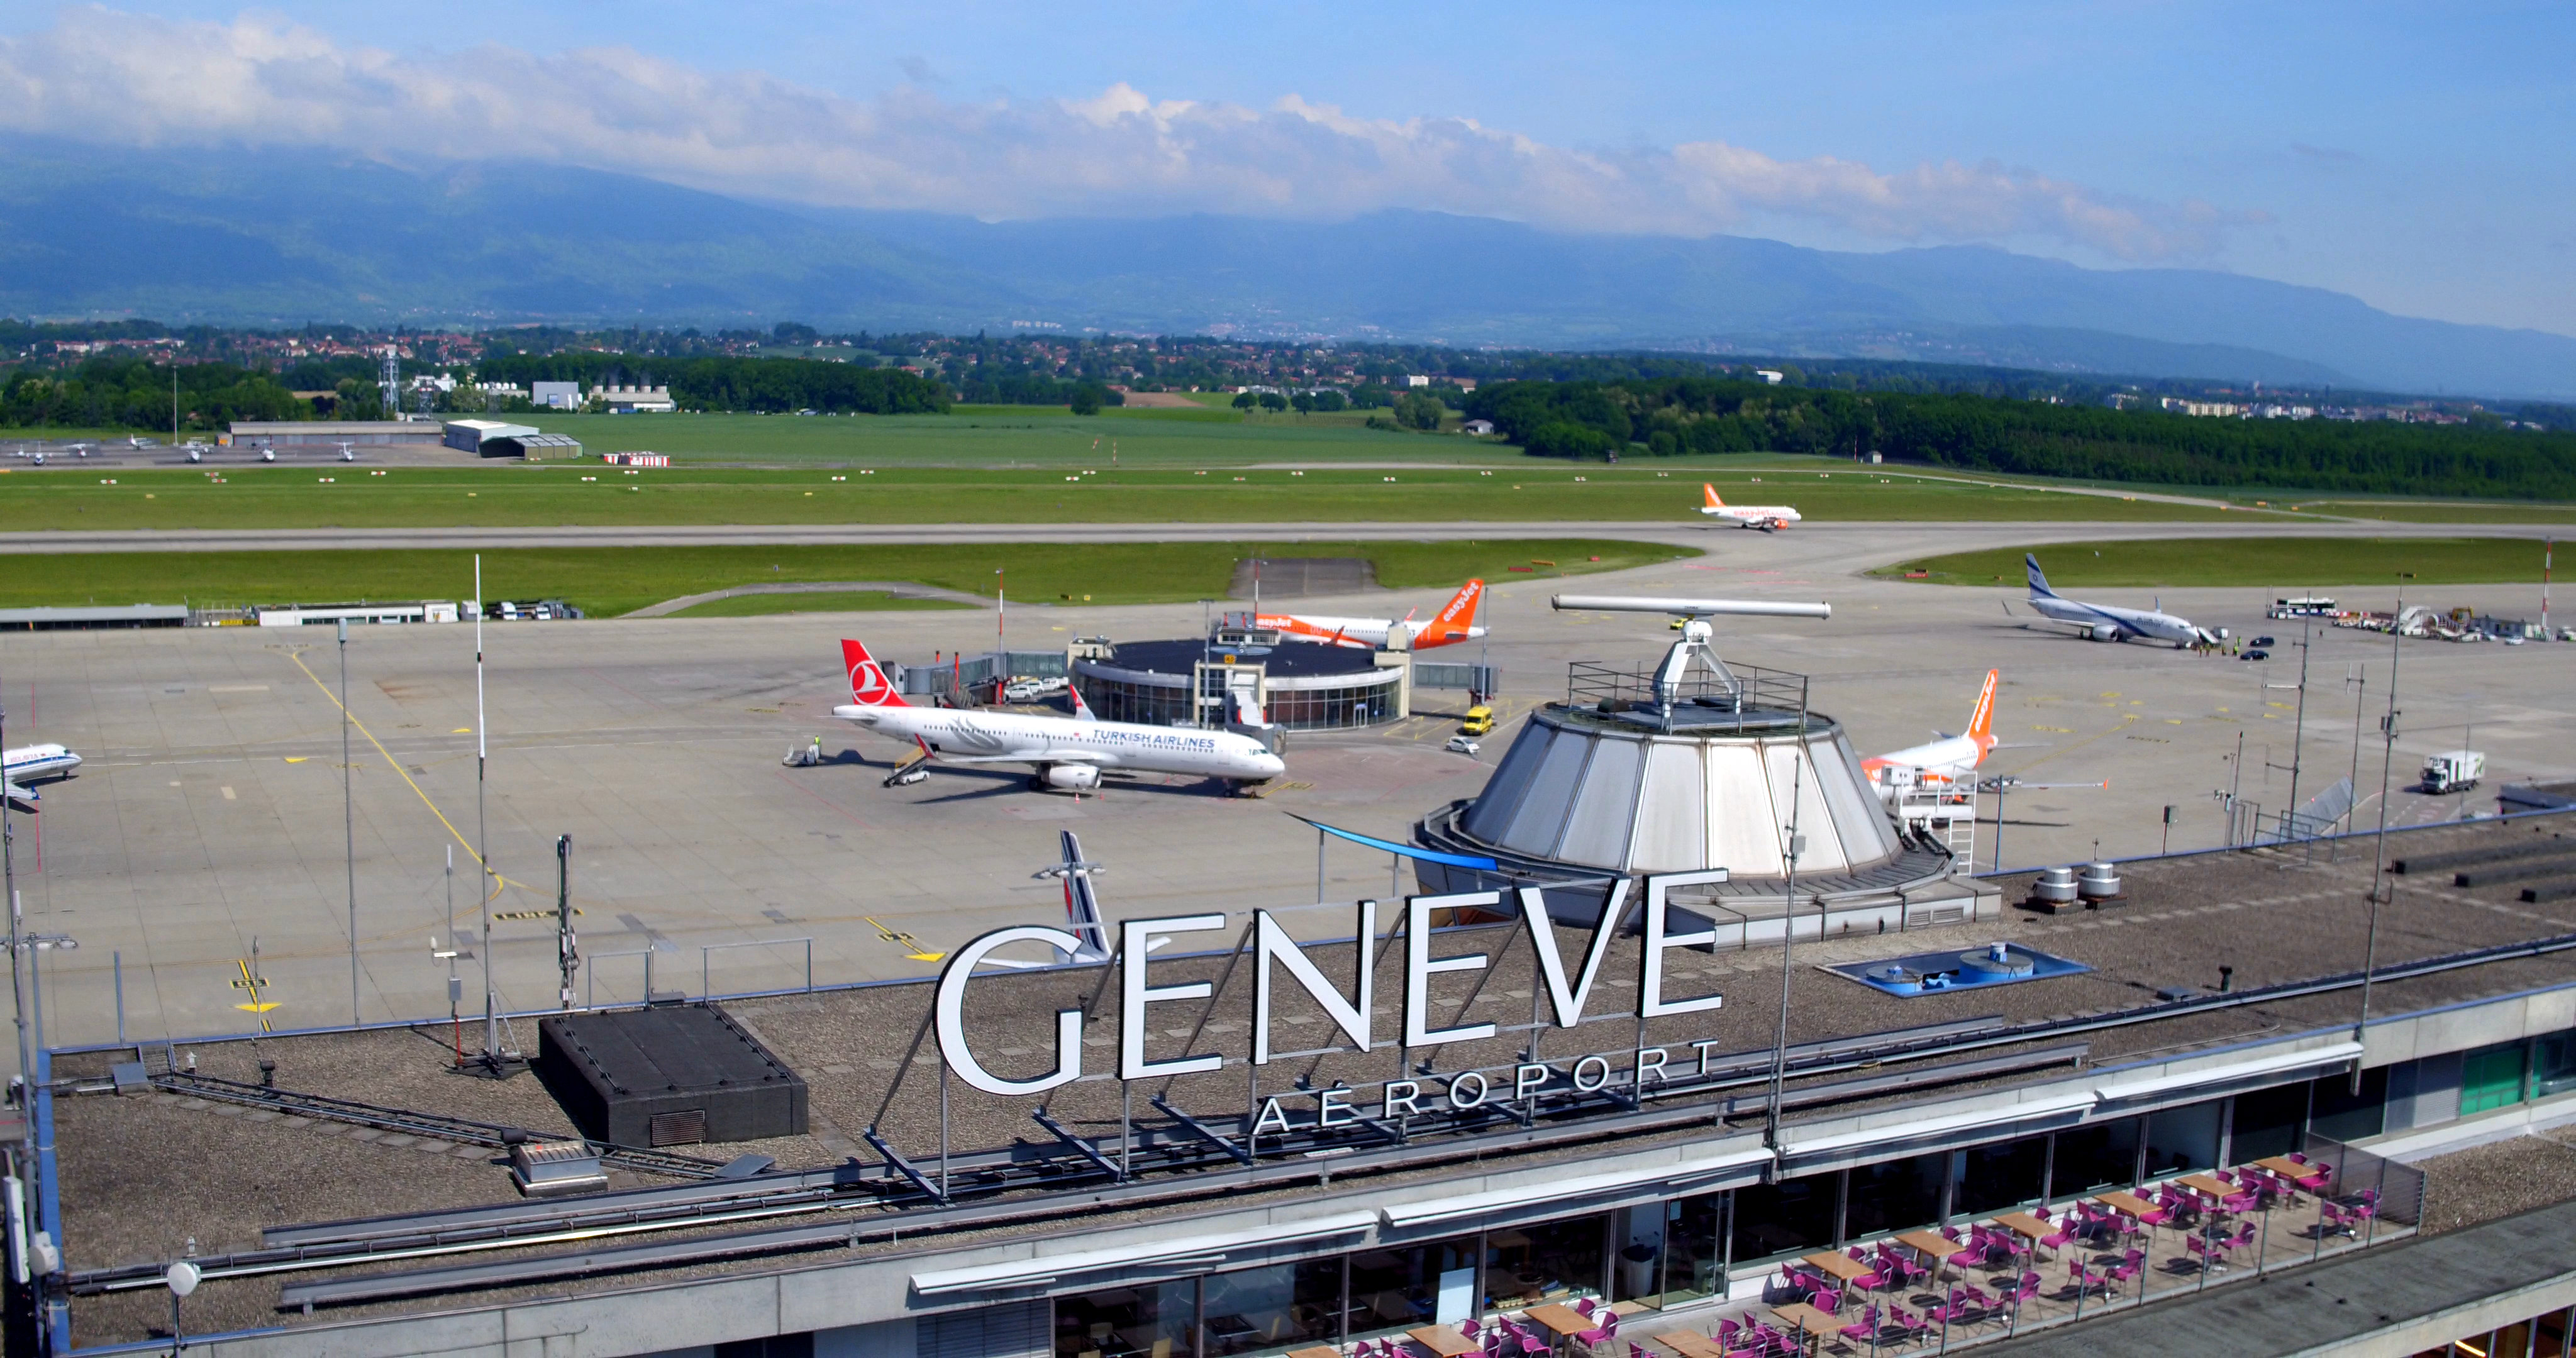 Аэропорт Женевы